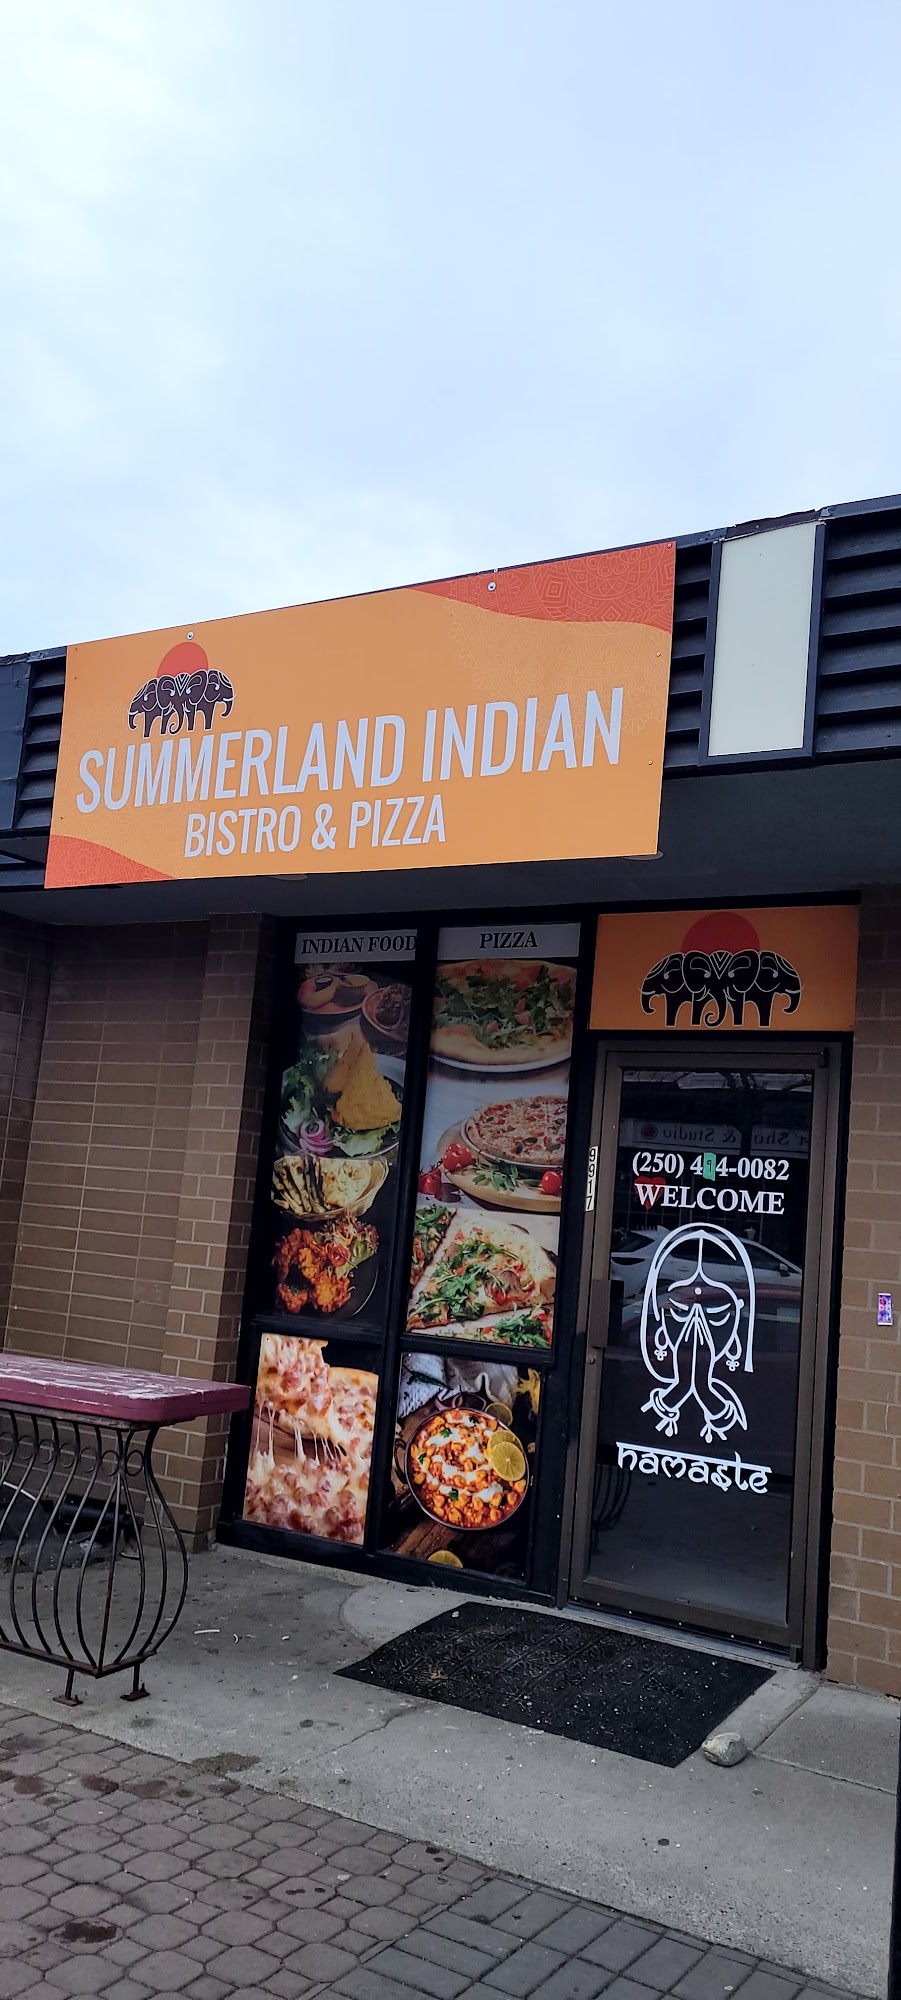 Summerland Indian Bistro & Pizza